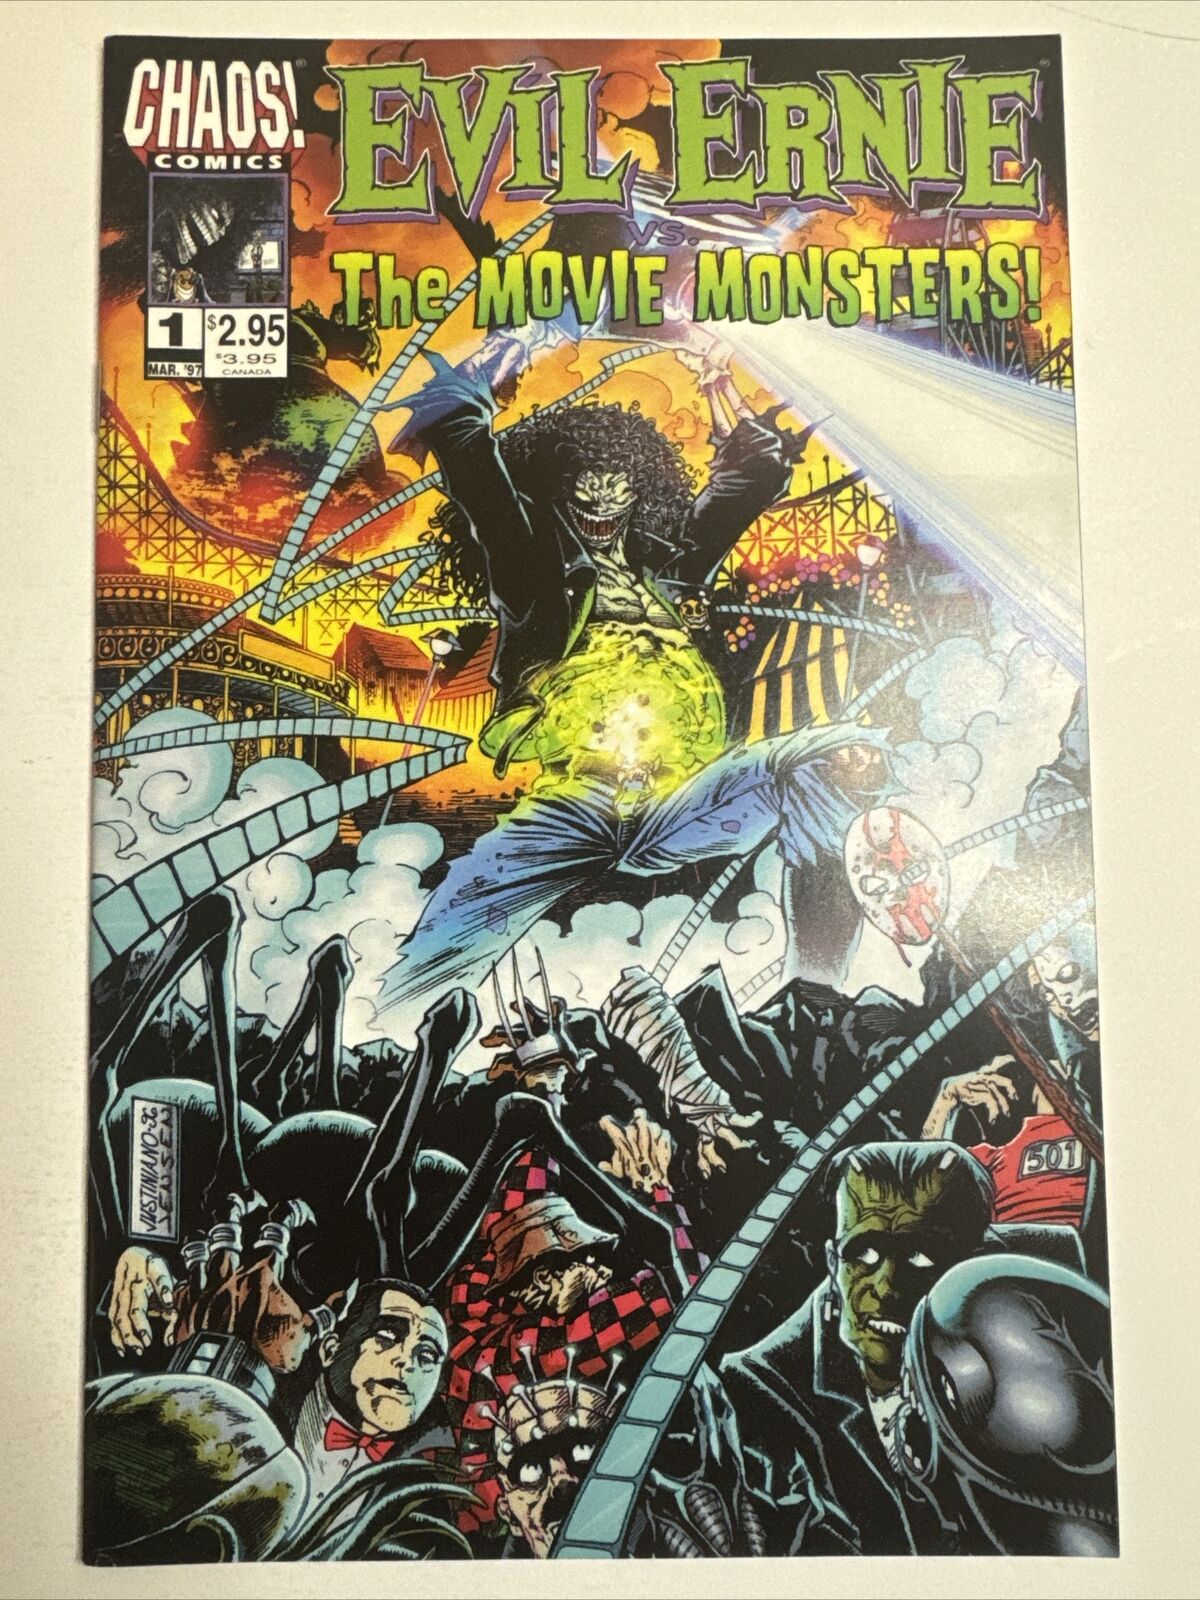 Evil Ernie: “The Movie Monsters” #1  Chaos Comics, 1997, NM